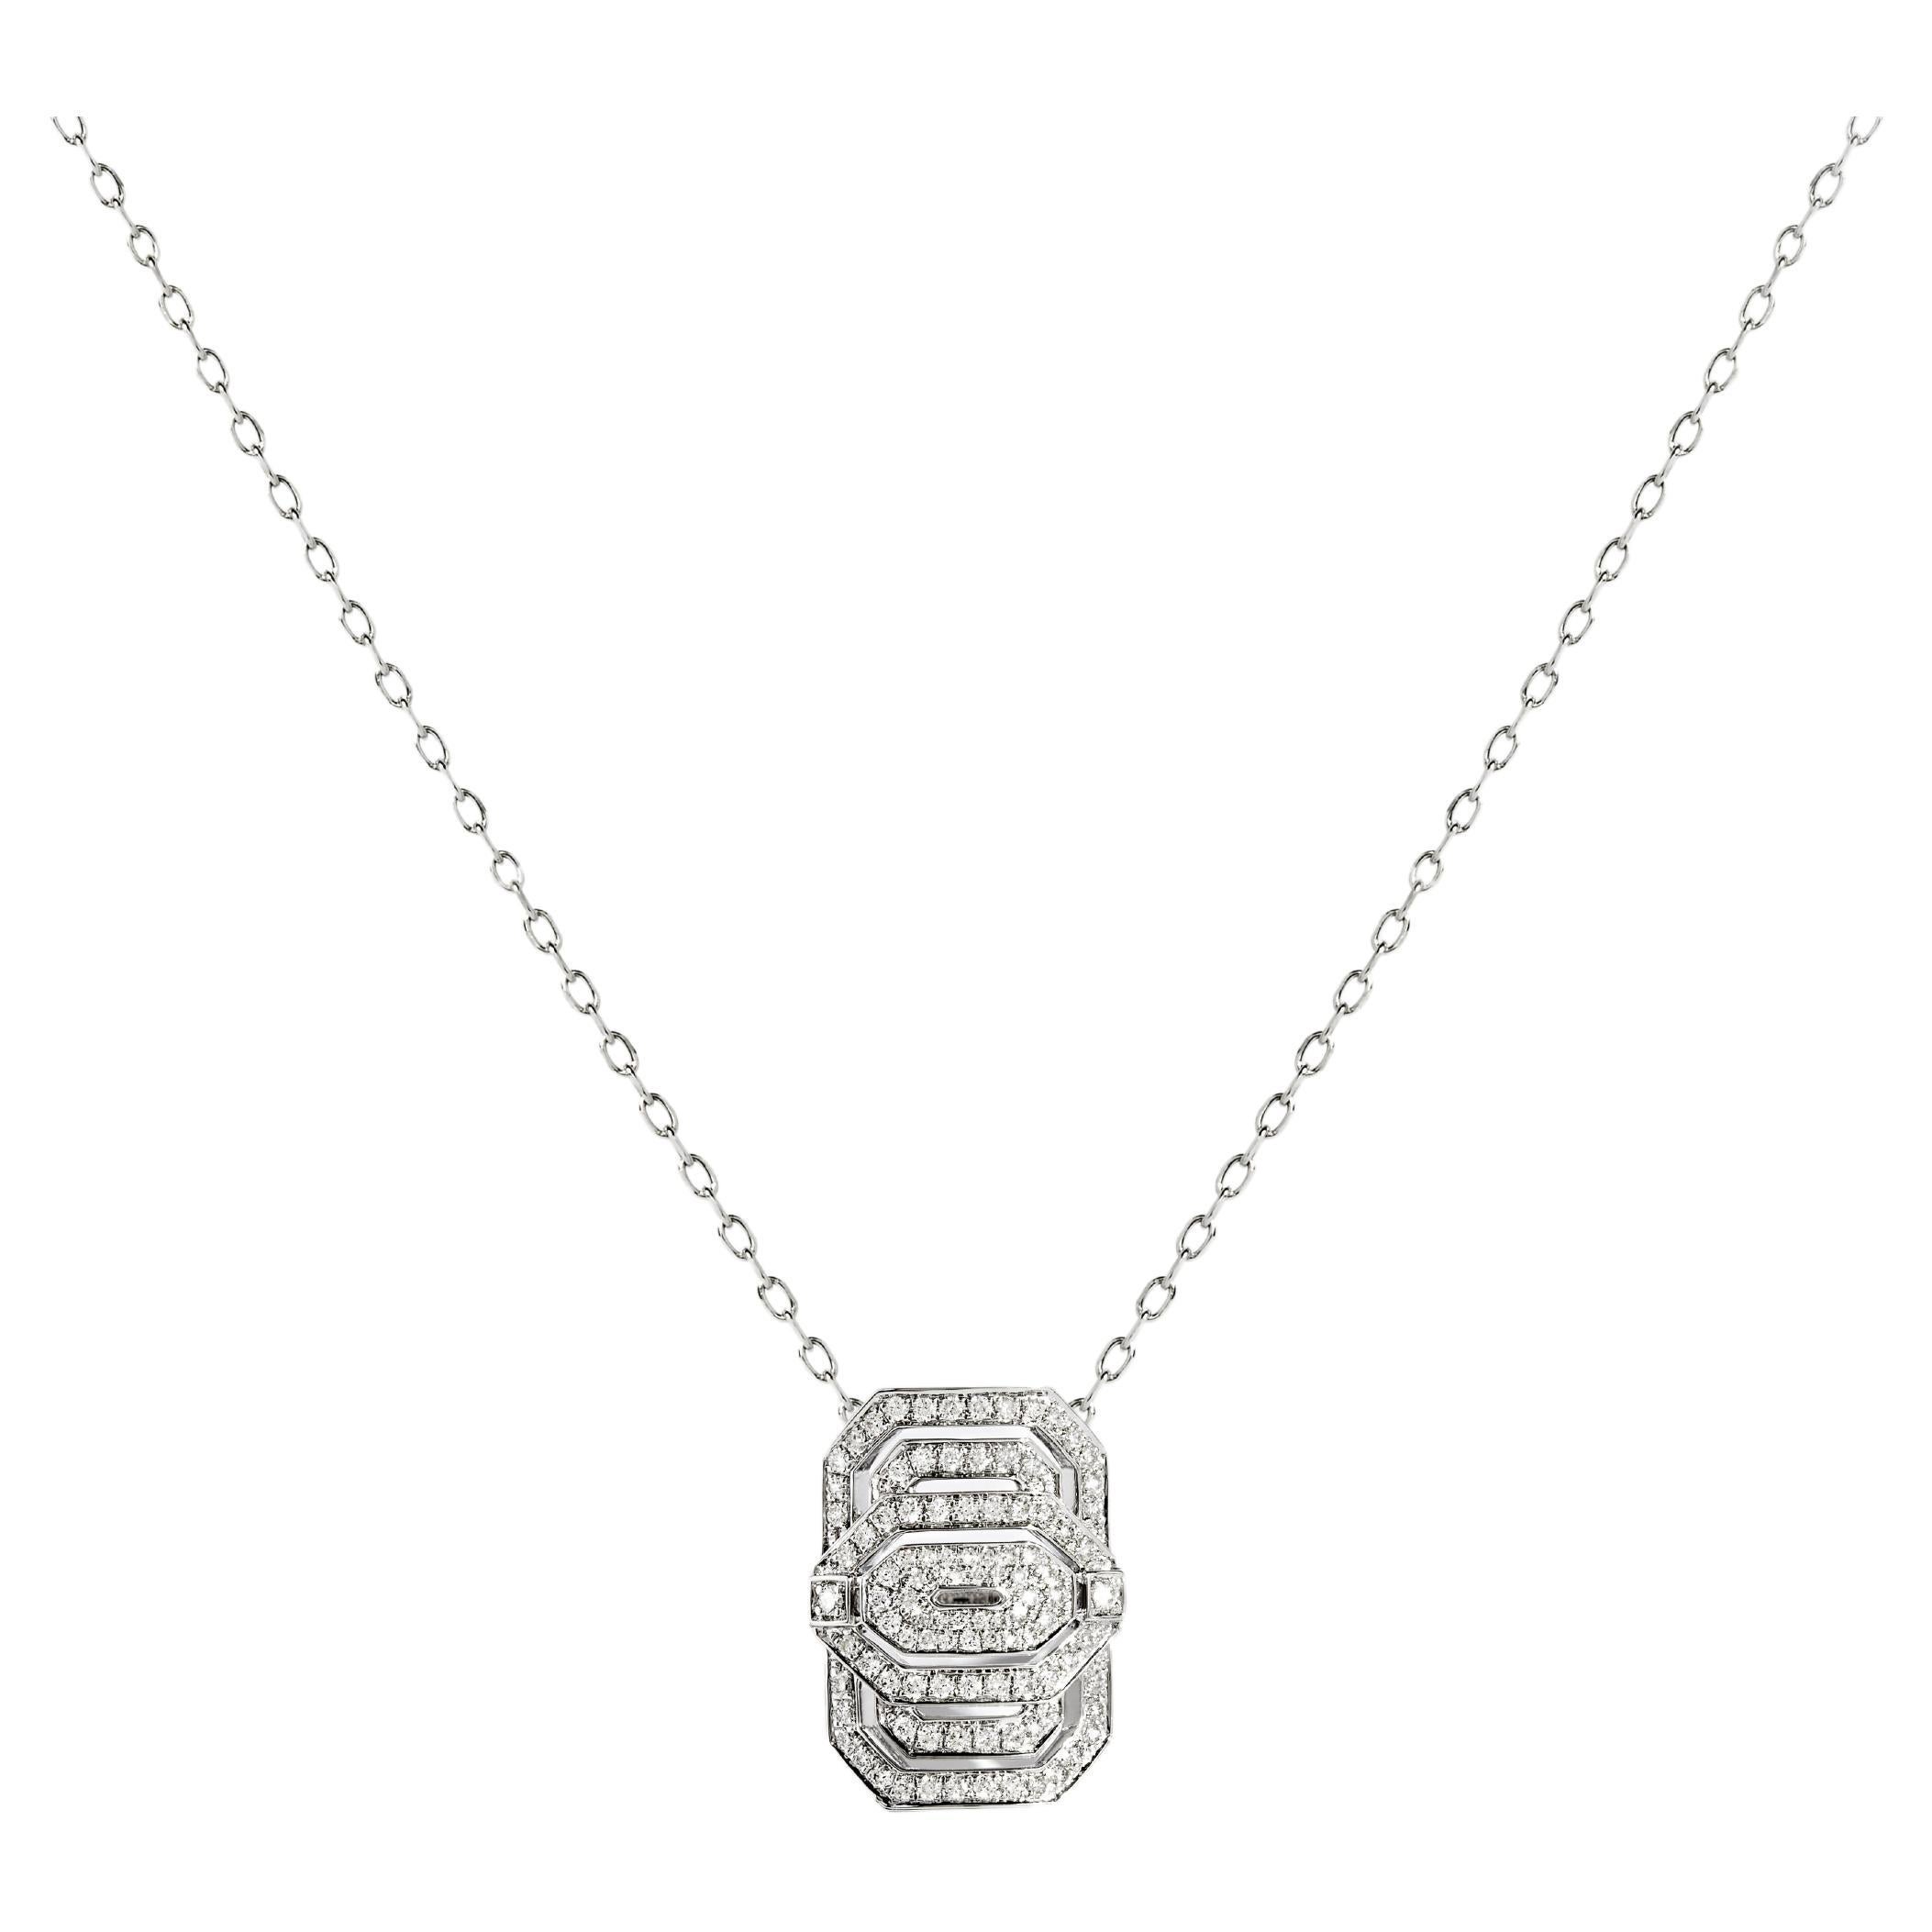 STATEMENT Paris - Art Deco Necklace Mini My Way Diamonds & Silver 0.56 Carat For Sale